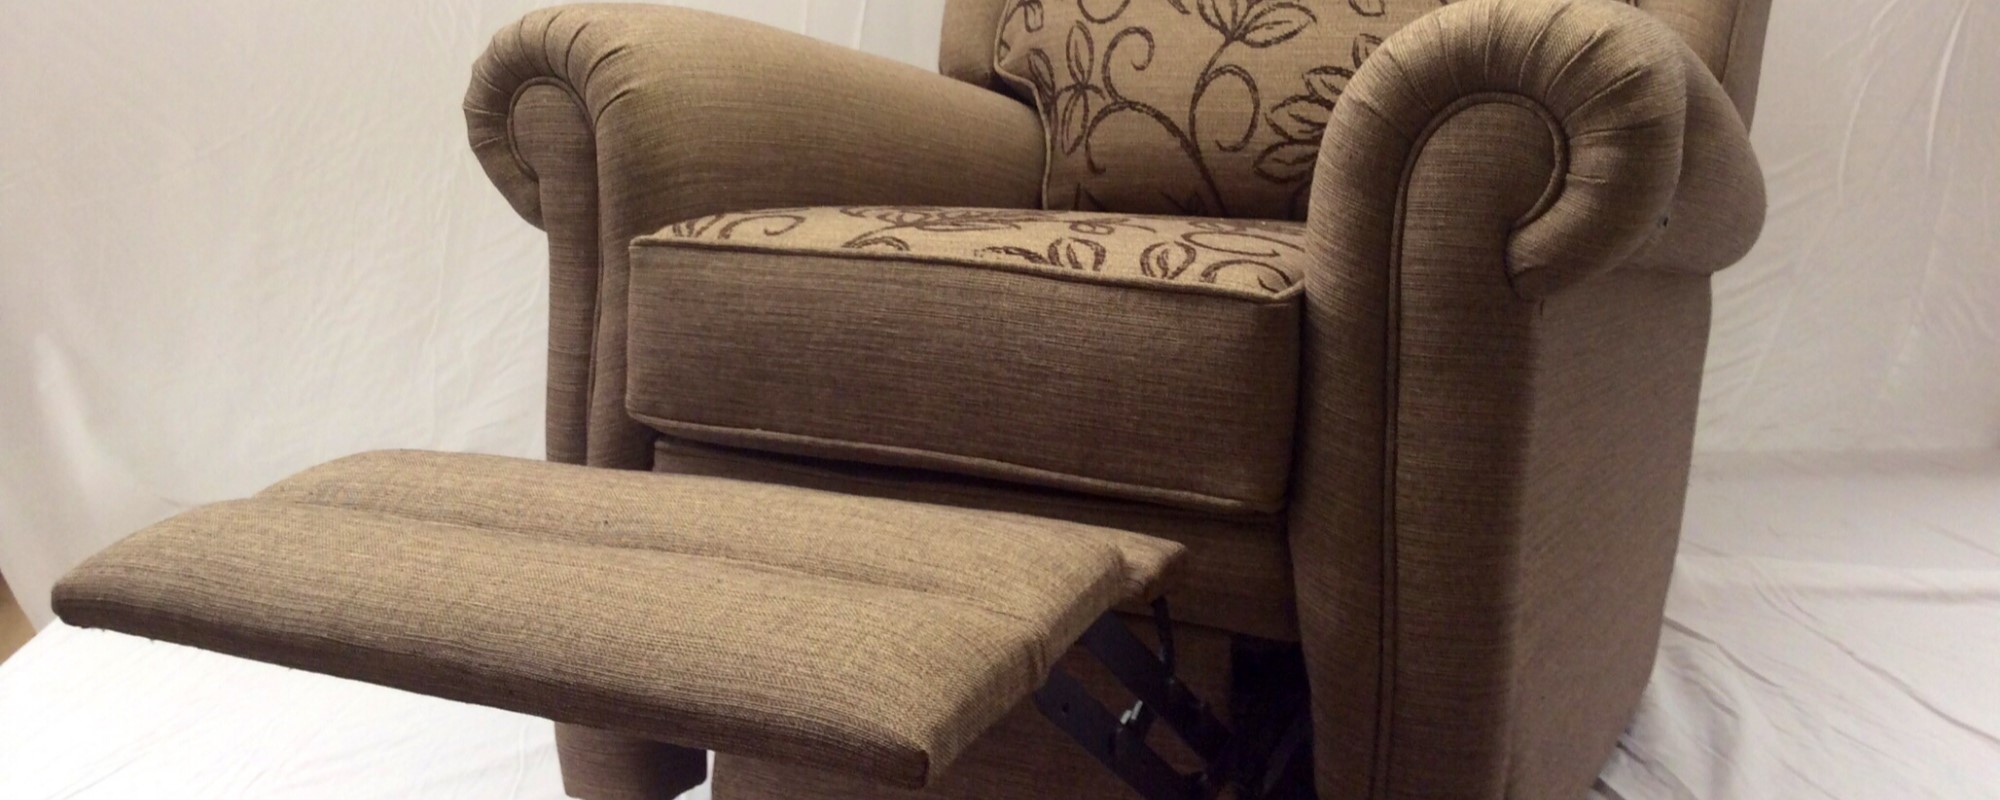 designer reclining chairs cannock